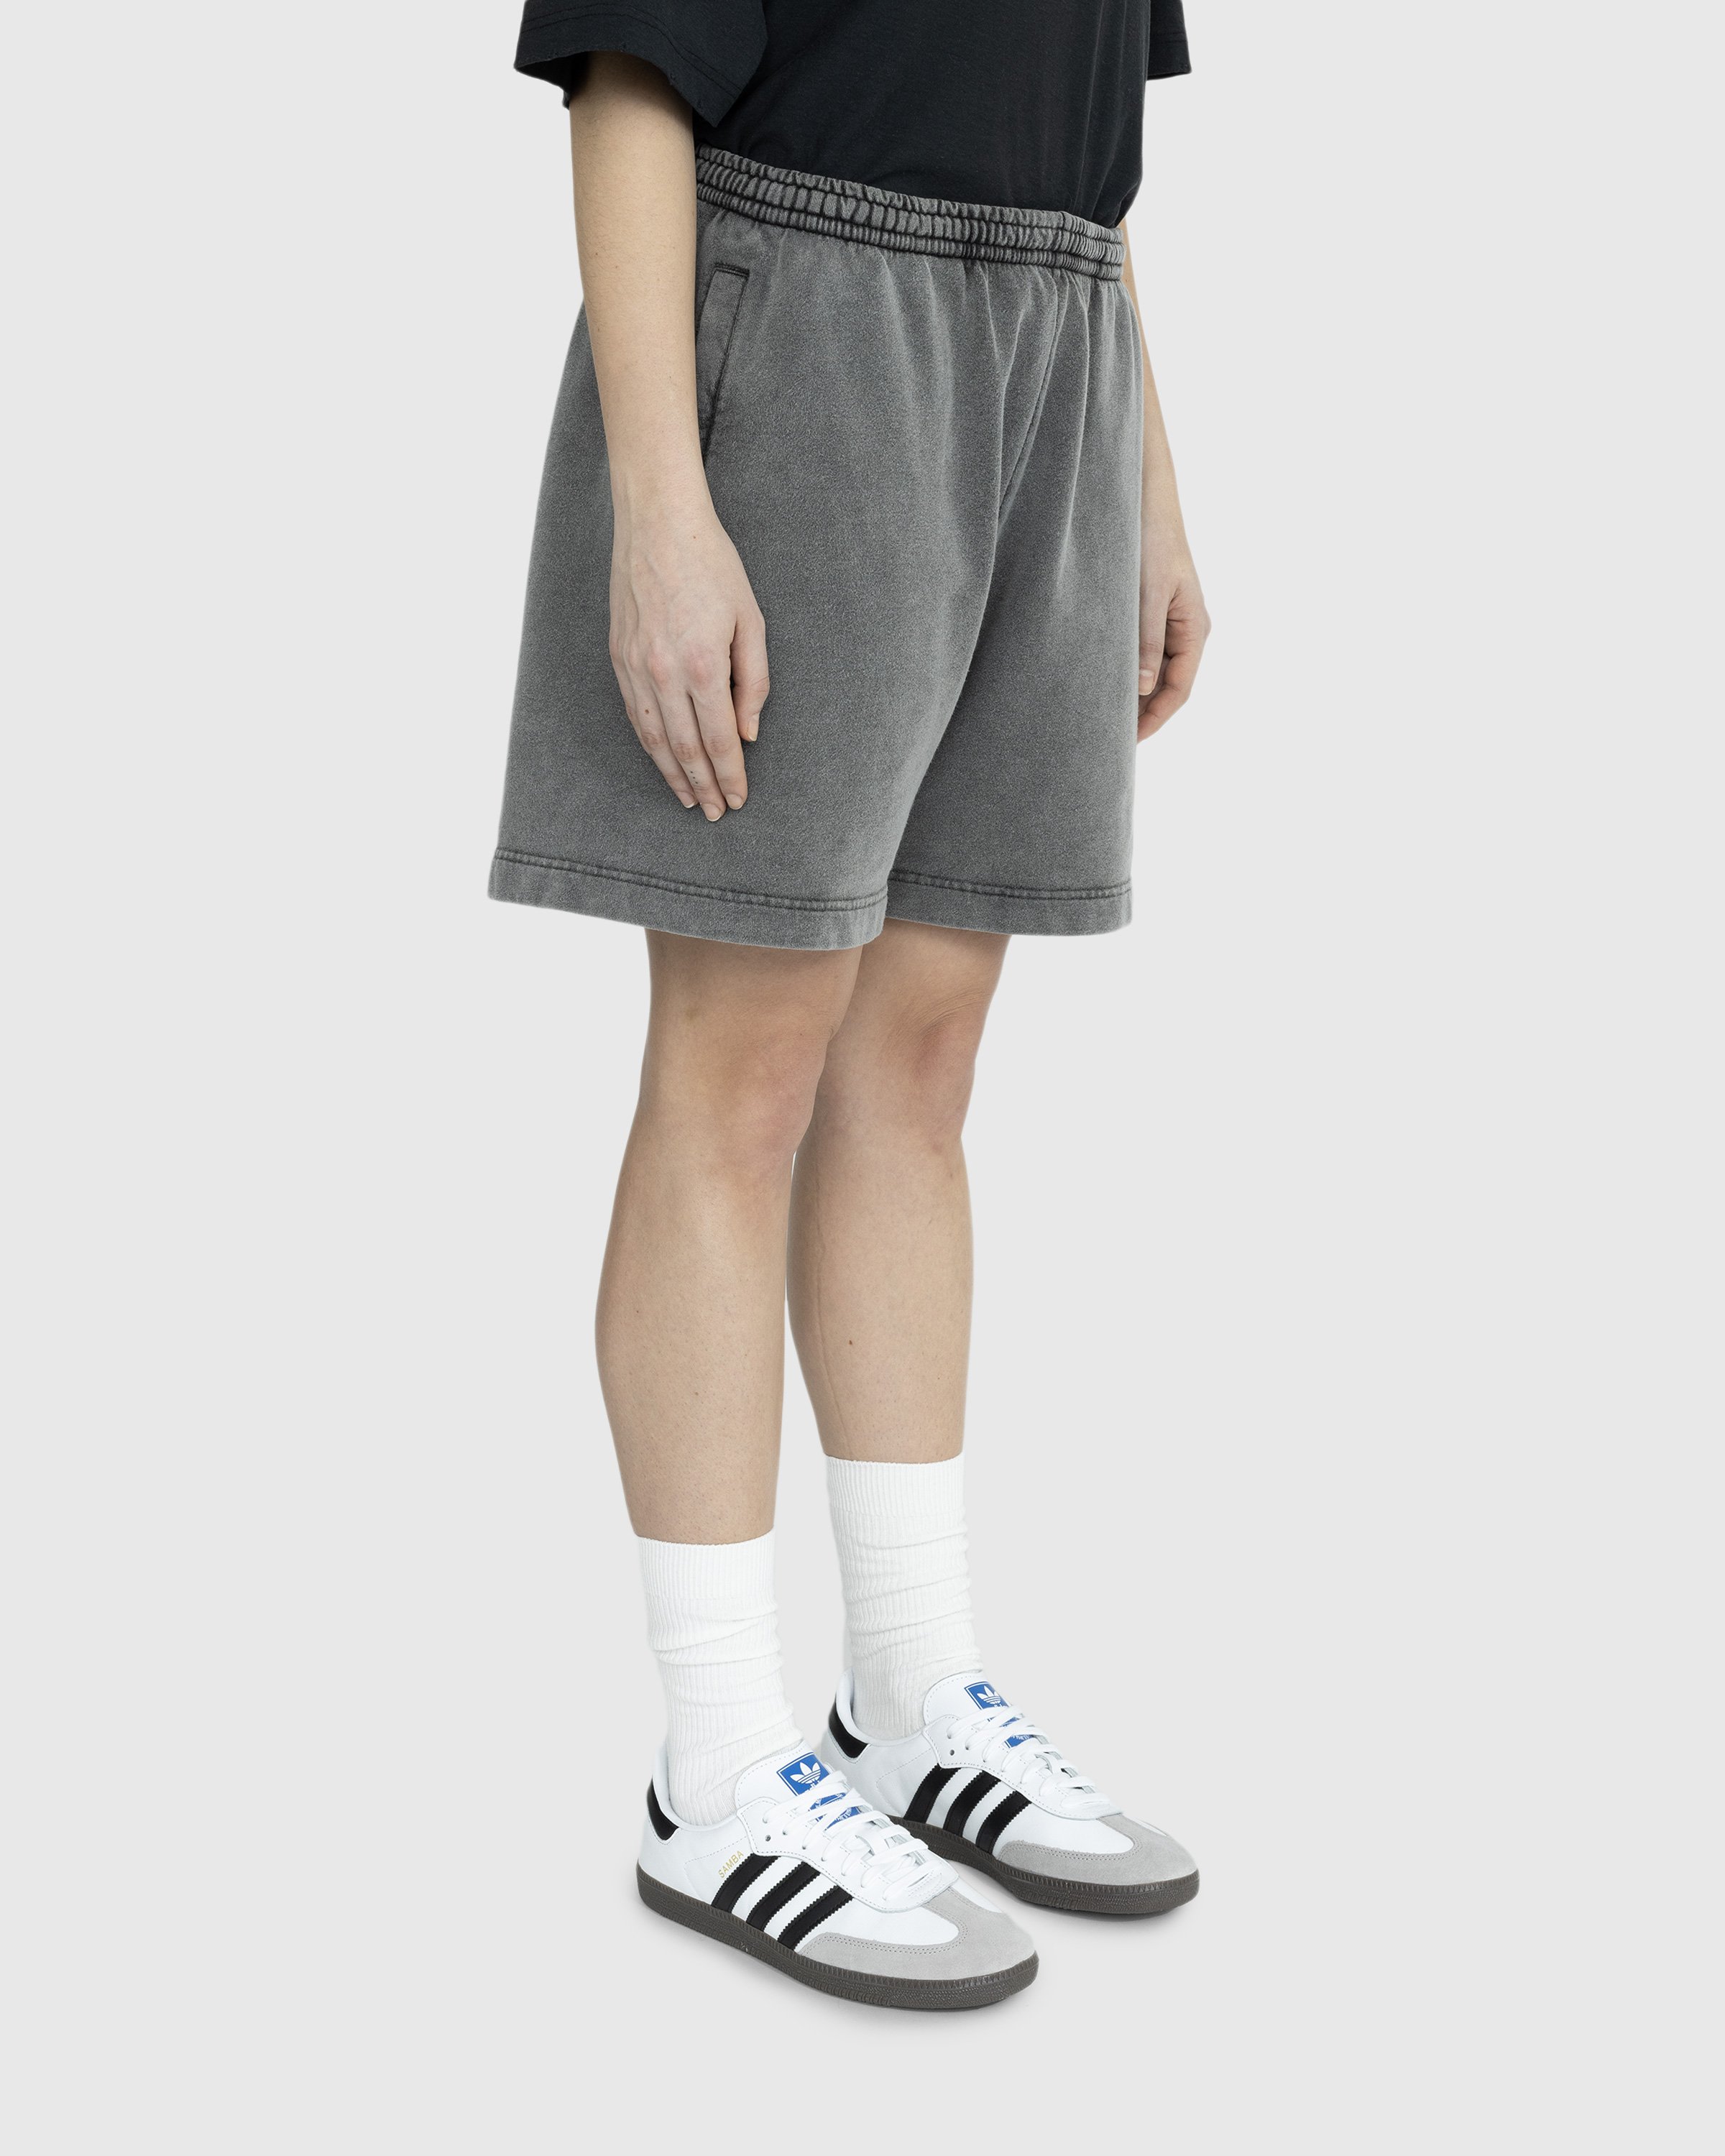 Acne Studios - Cotton Shorts Faded Black - Clothing - Grey - Image 4